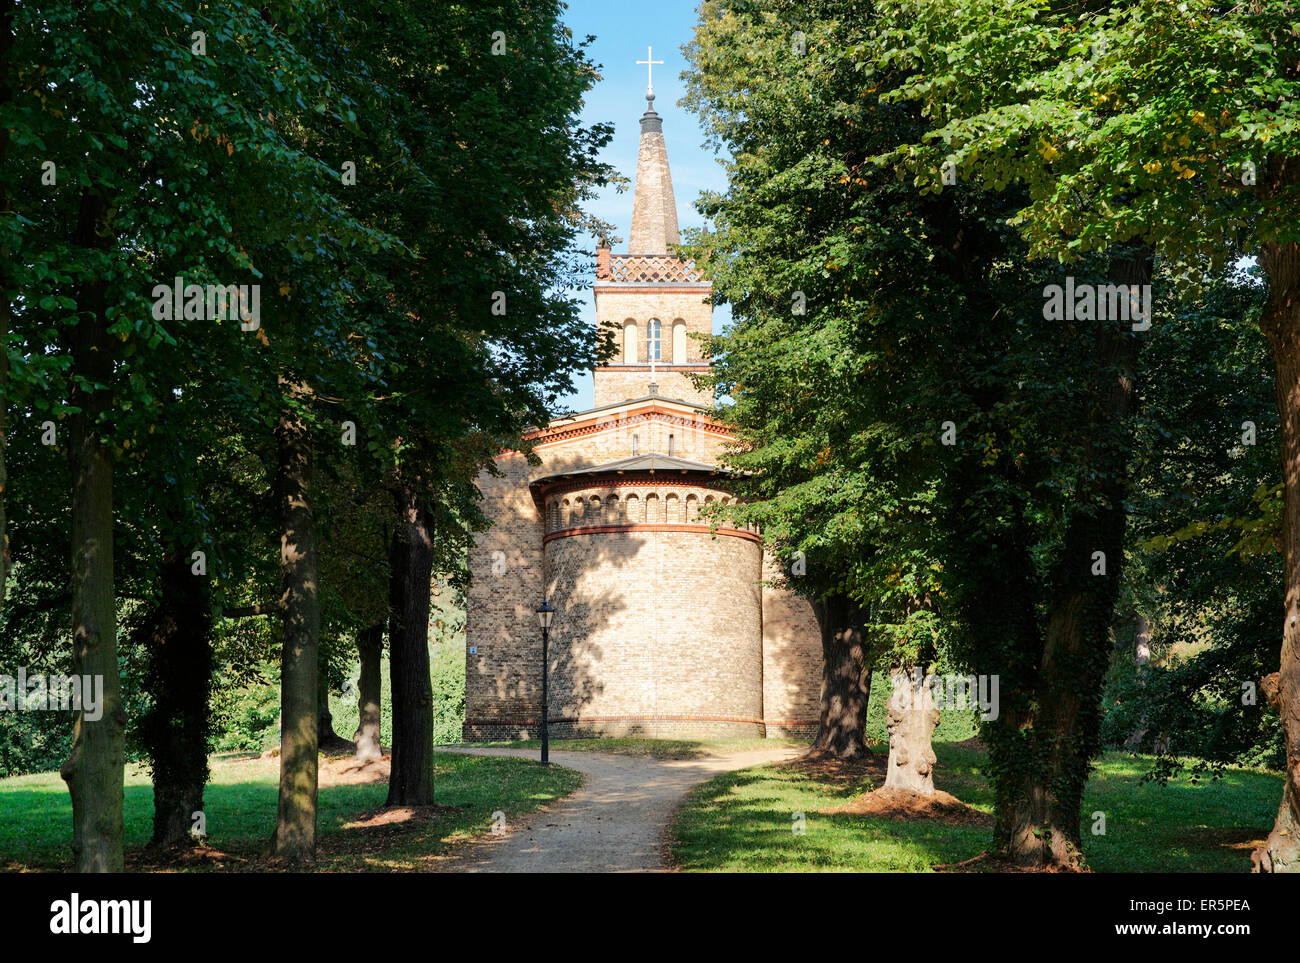 Petzower village church, Grelleberg, Petzow, Brandenburg, Germany Stock Photo